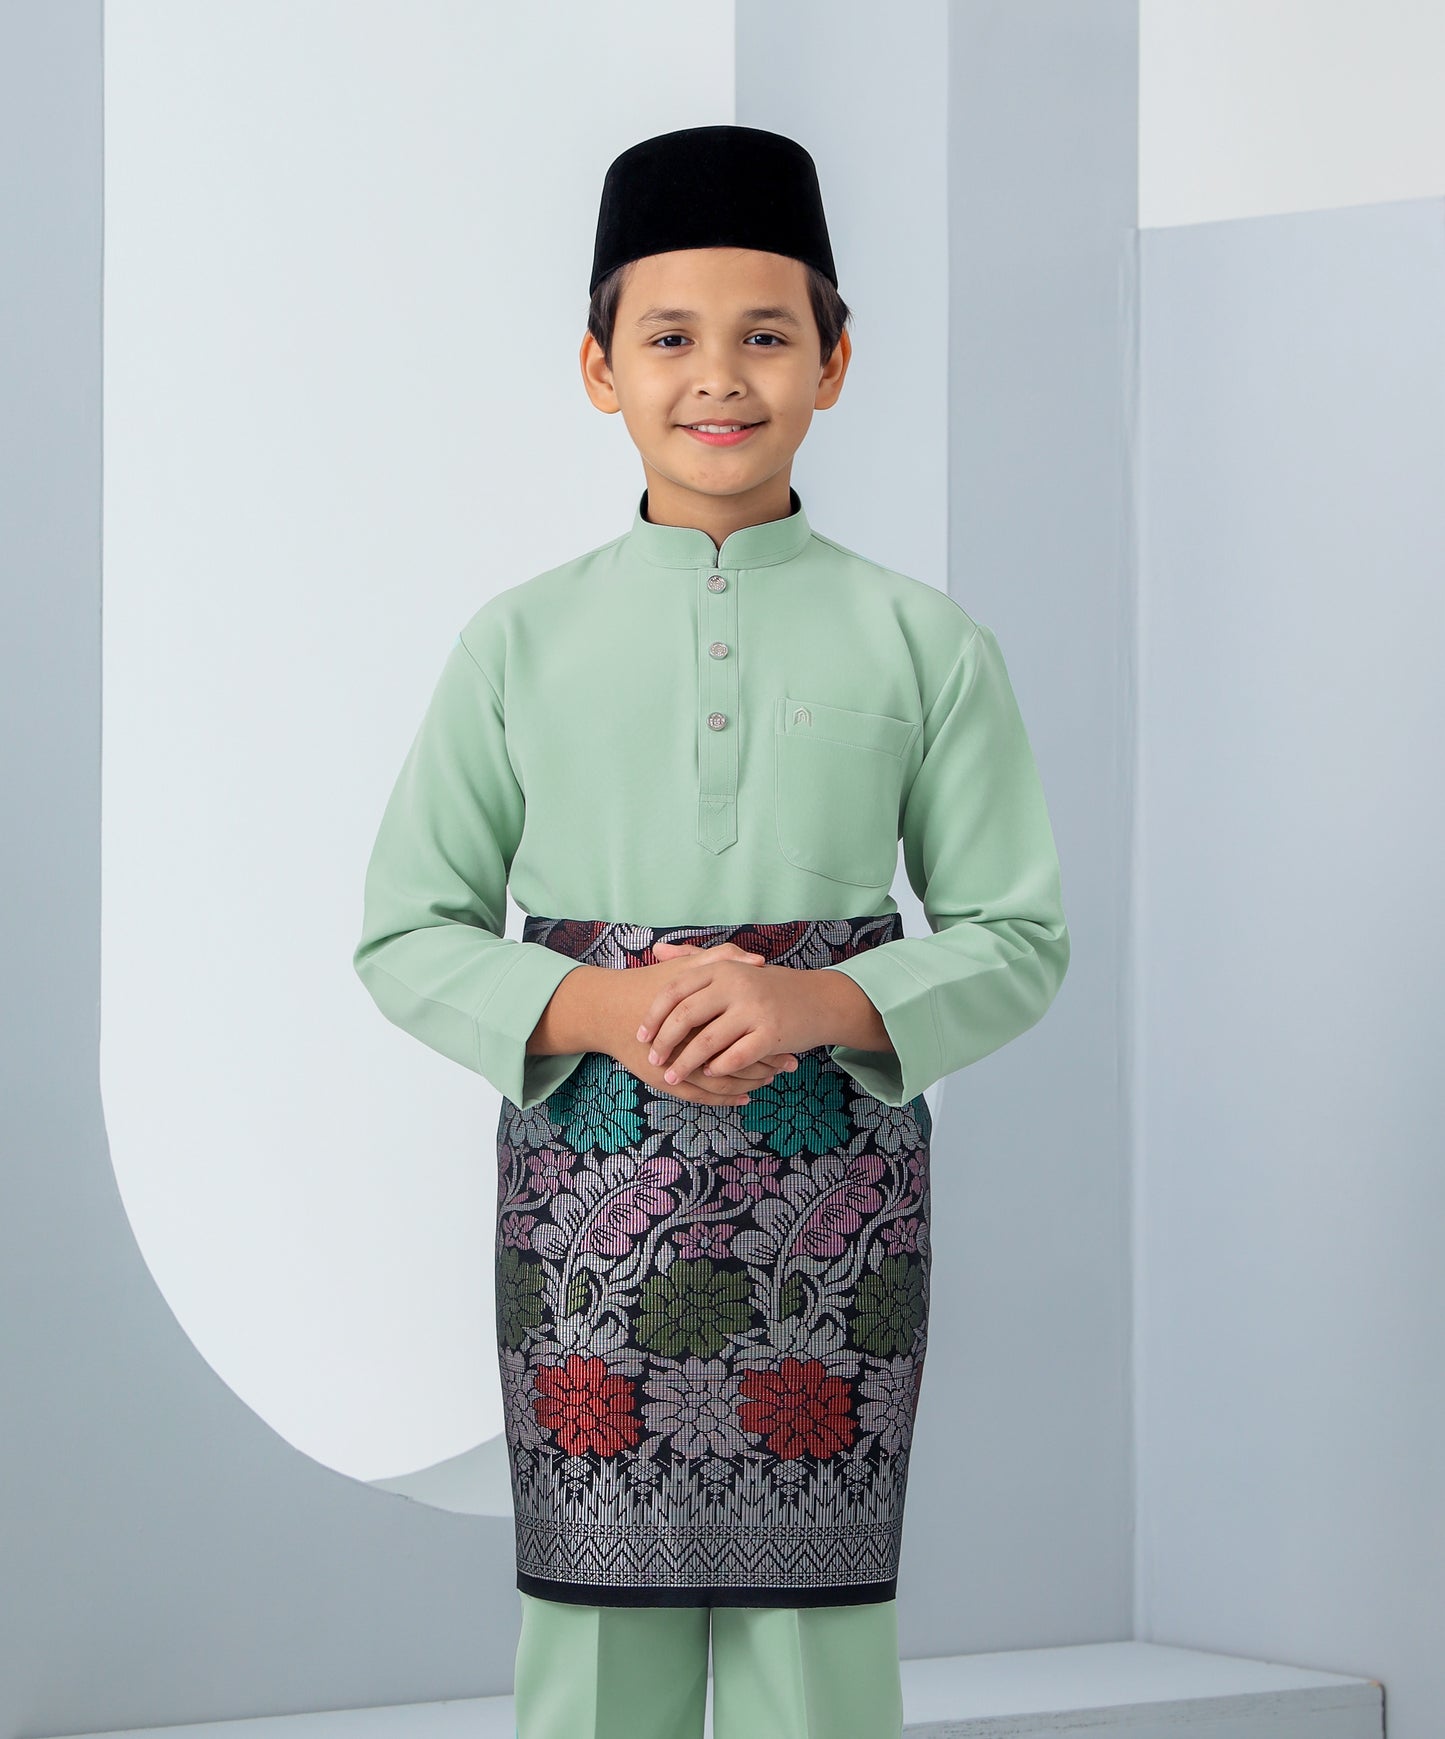 Baju Melayu Haseki Kids - Pastel Mint